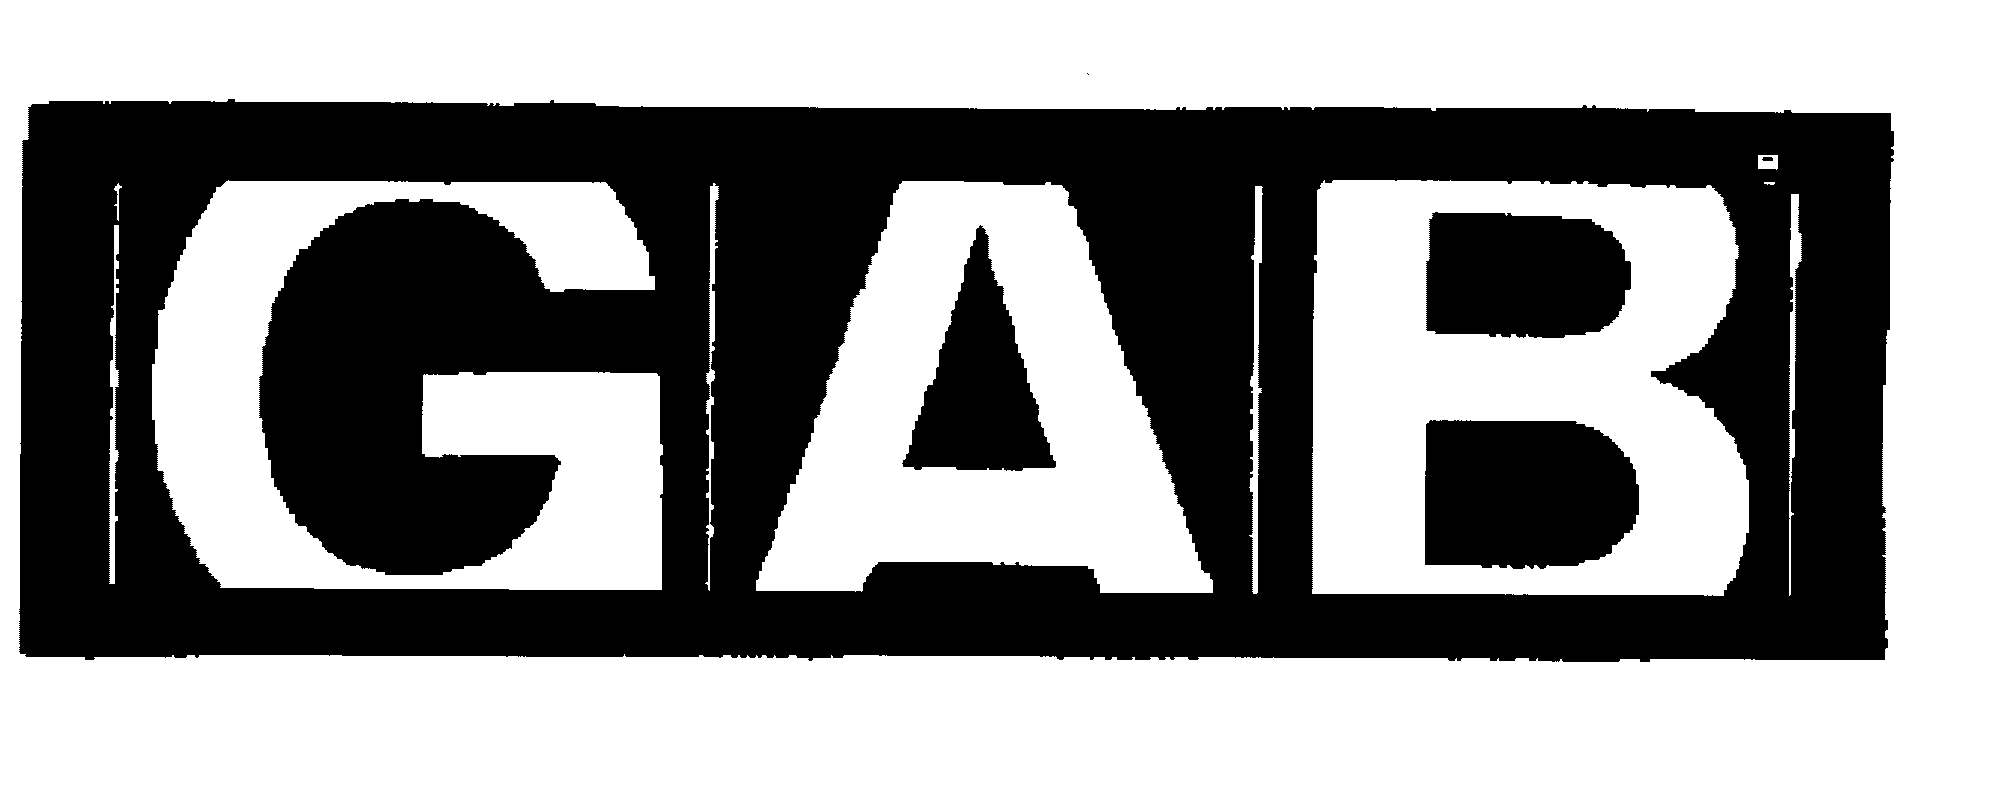 Trademark Logo GAB